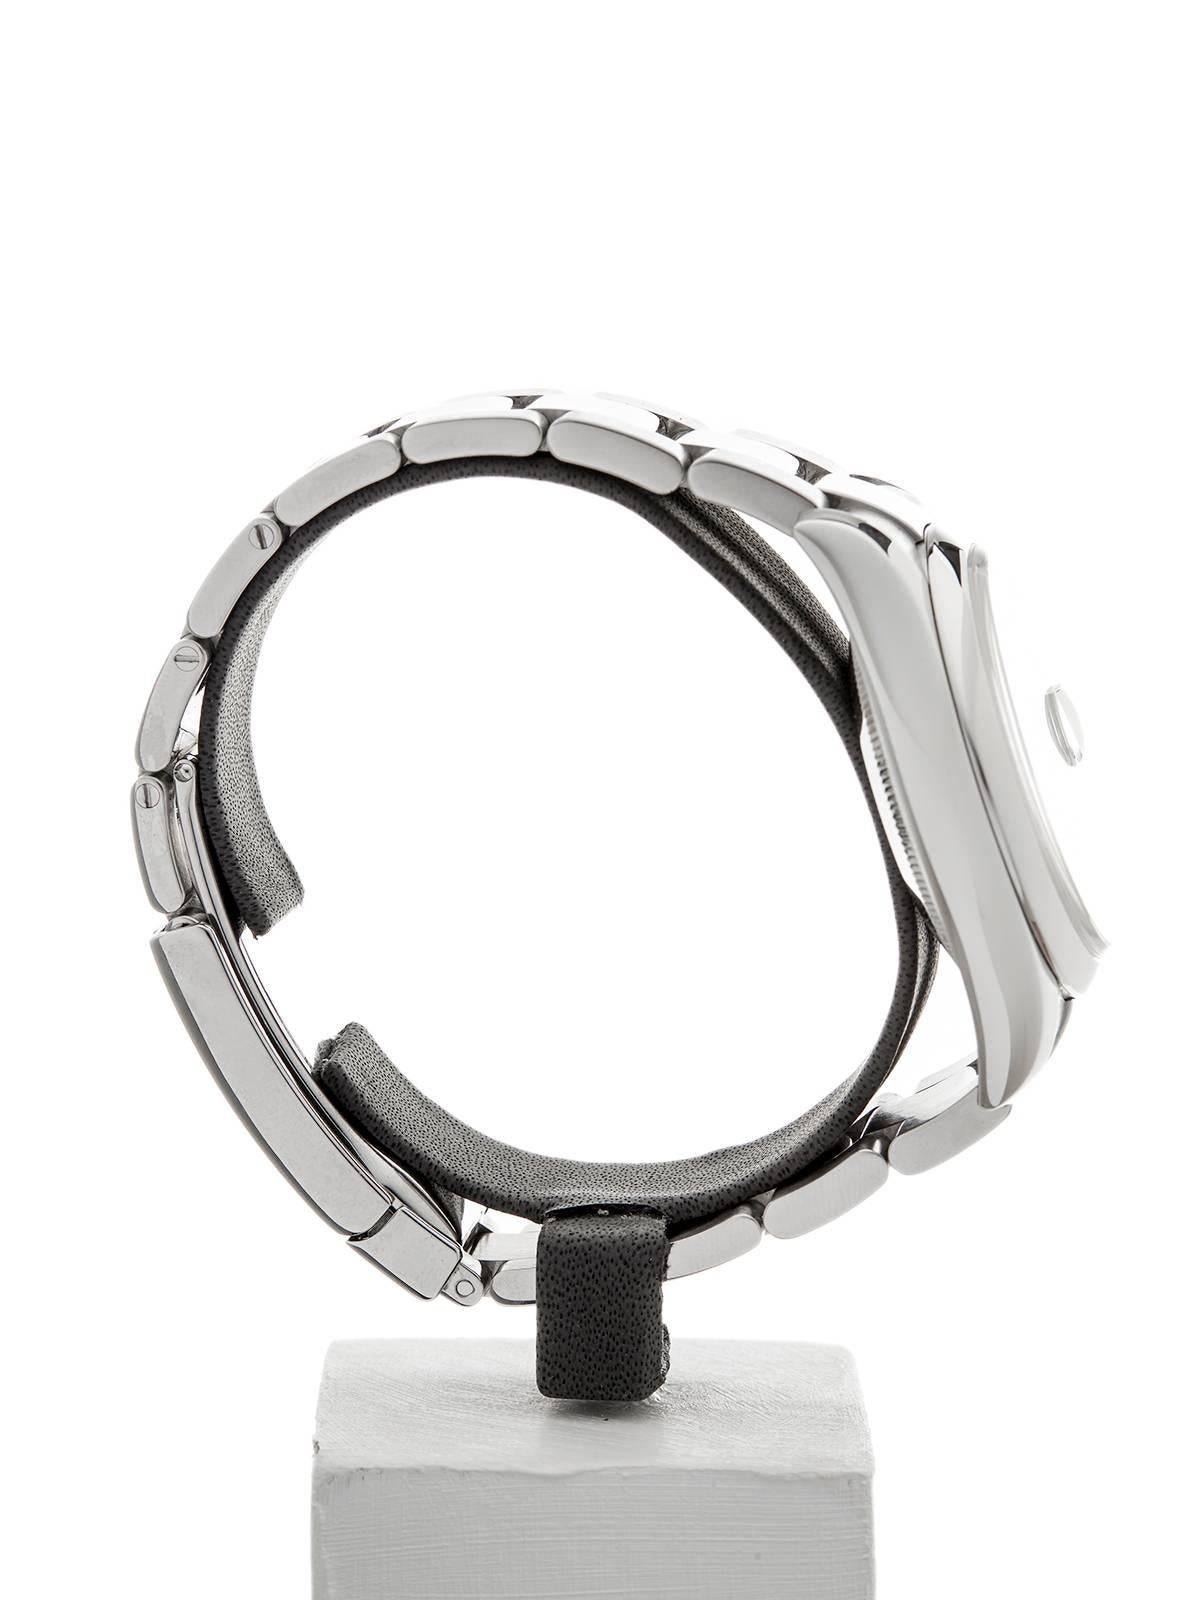 Rolex Stainless Steel Datejust Automatic Wristwatch Ref 116200, 2006 2